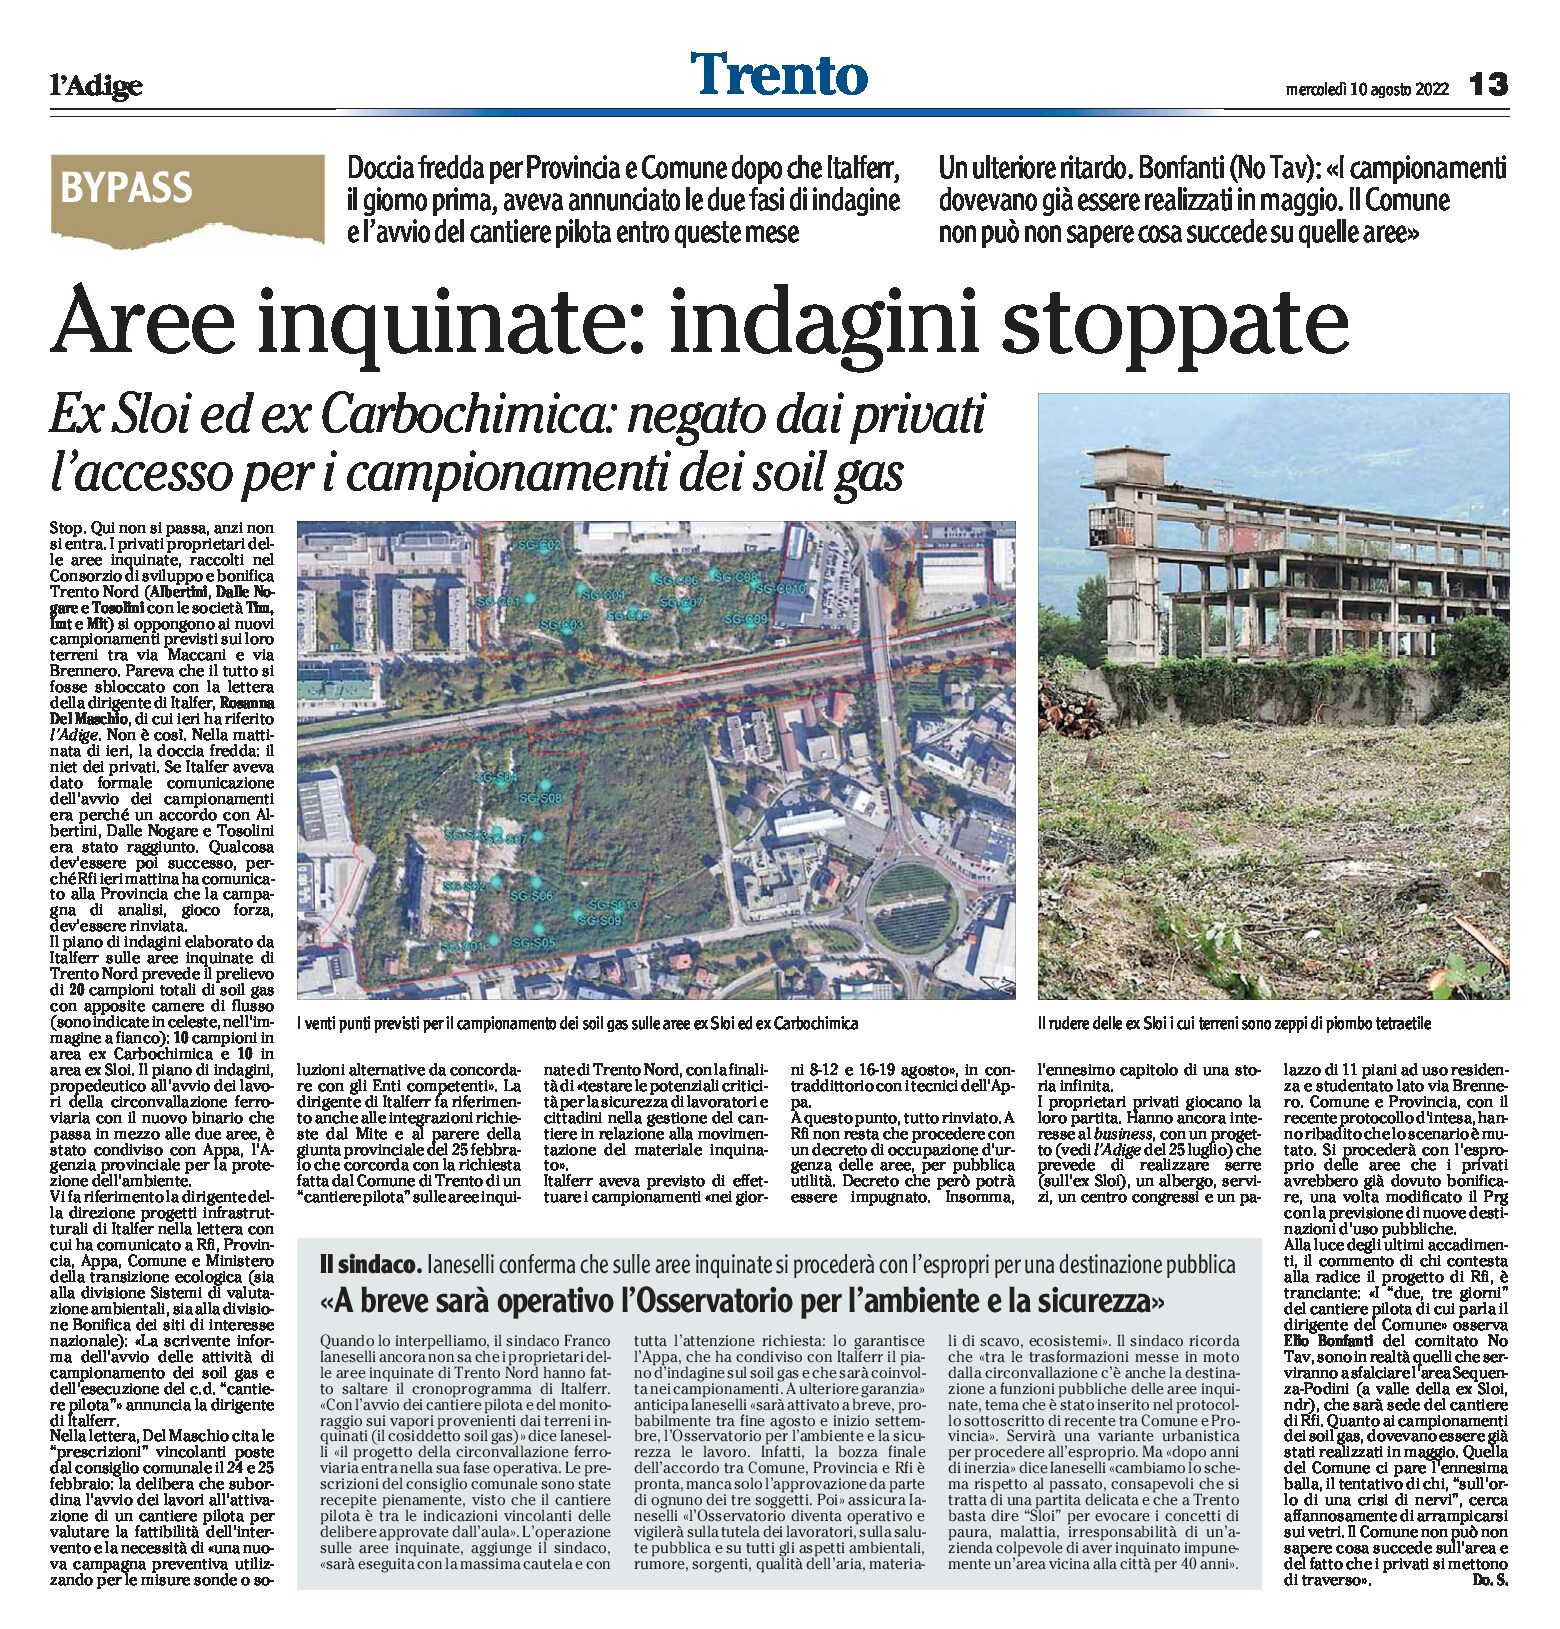 Trento, bypass: aree inquinate, indagini stoppate